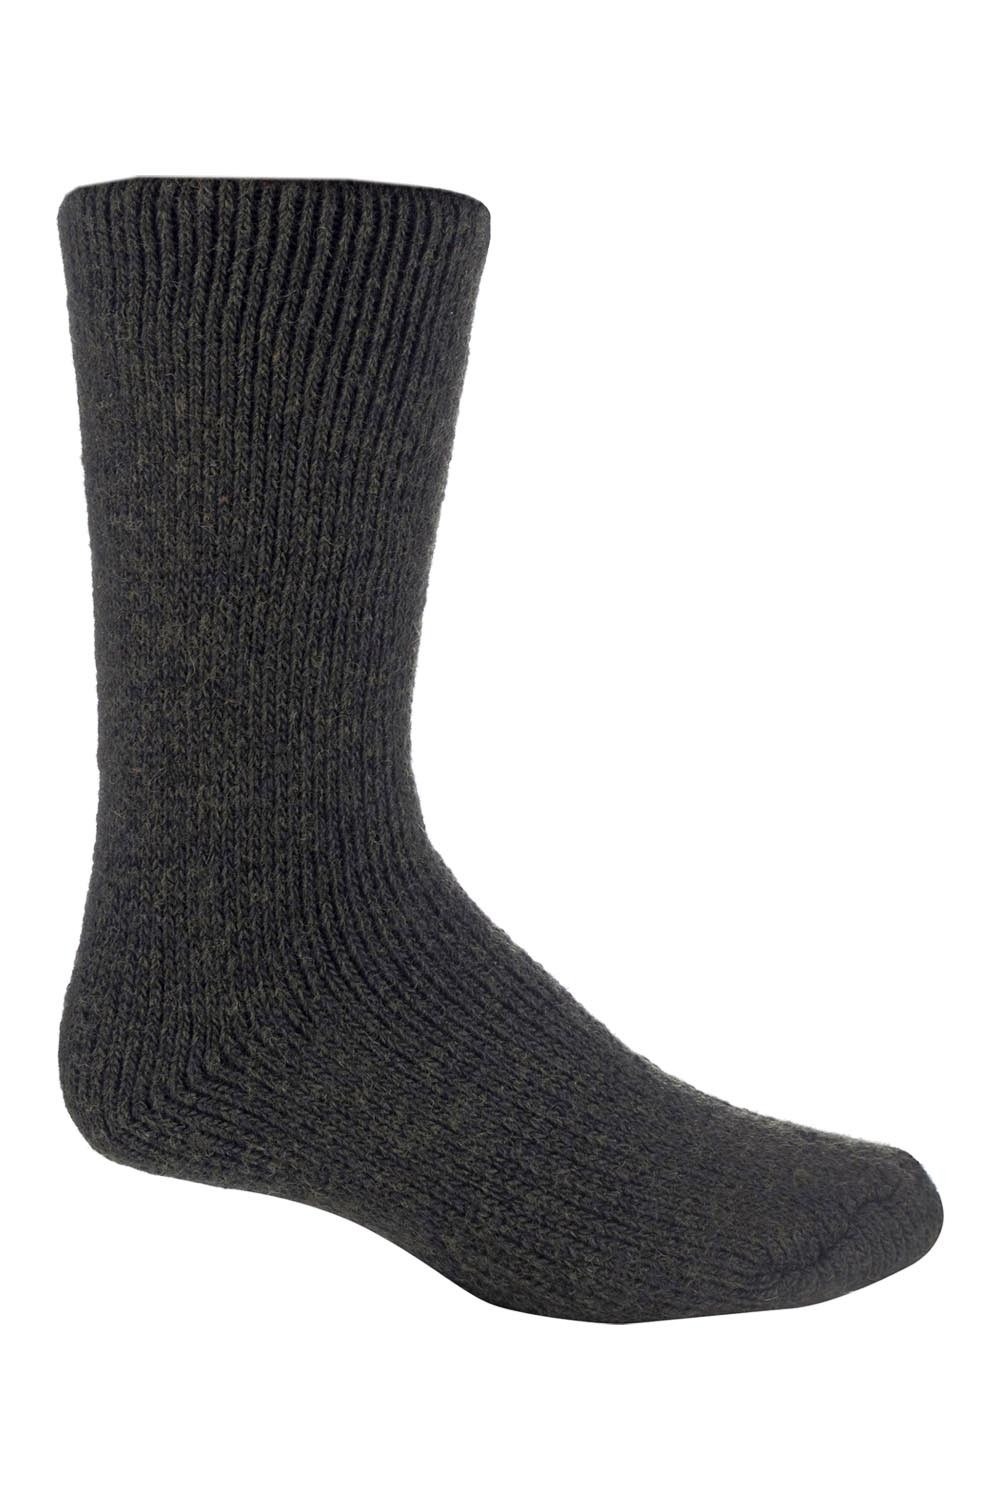 Mens Thick Thermal Wool Socks